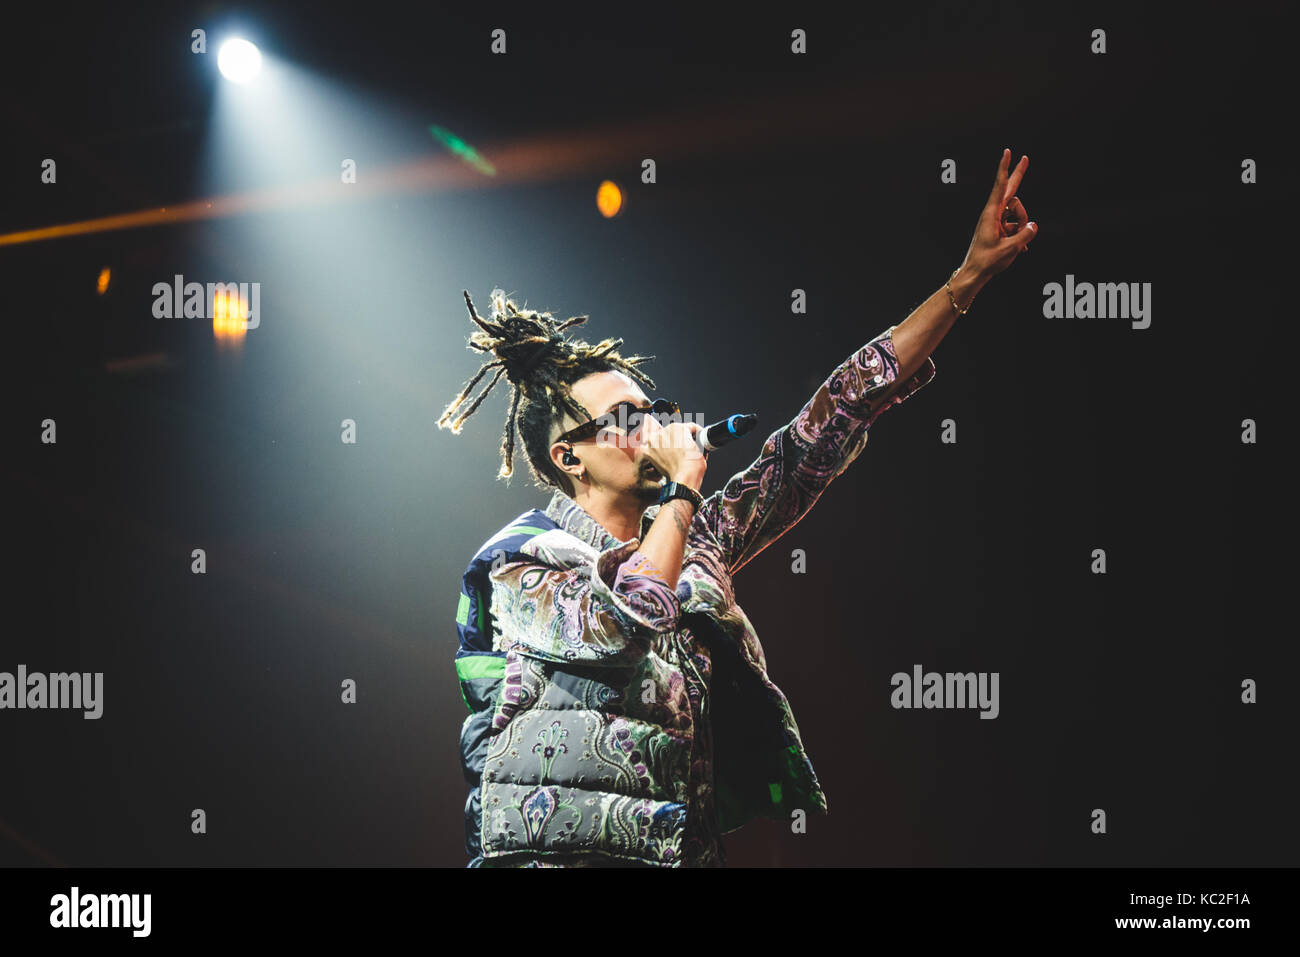 Torino, Italy. 30th Sep, 2017. The Italian rapper Ghali performing live on stage at the Officine grandi Riparazioni. Credit: Alessandro Bosio/Pacific Press/Alamy Live News Stock Photo